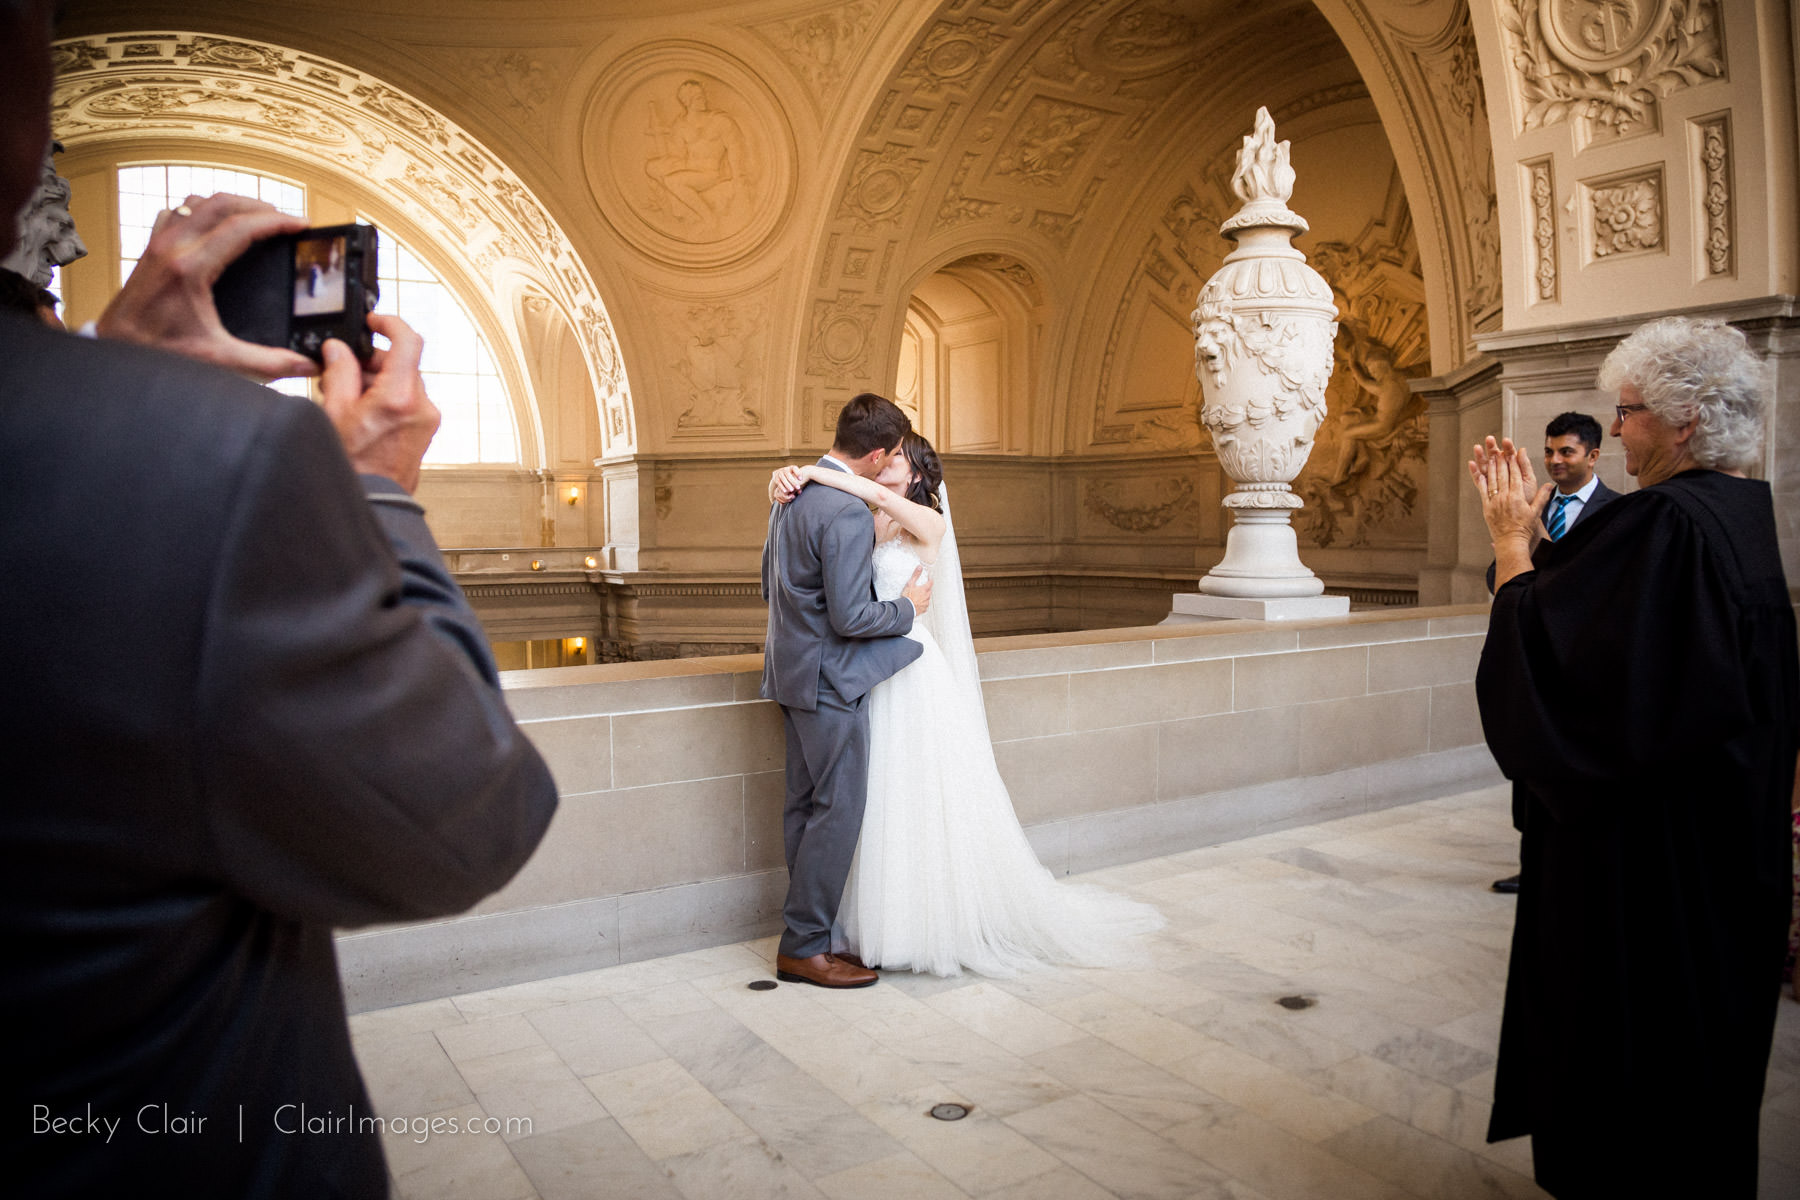 San Francisco Weddings - San Francisco City Hall © Clair Images 2017